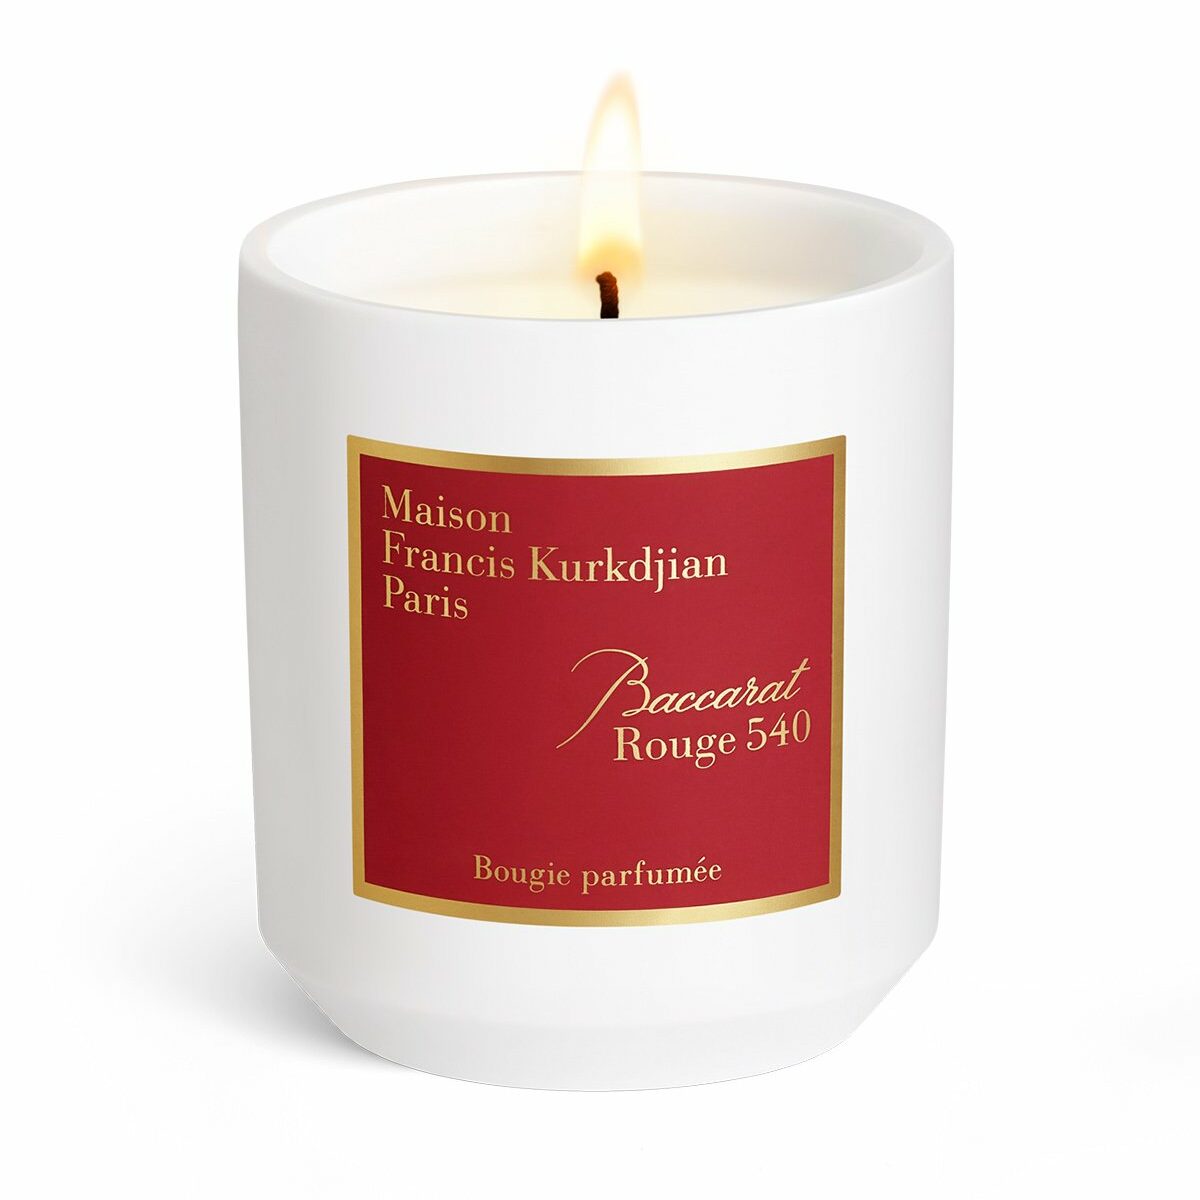 Maison Francis Kurkdjian Paris Baccarat Rouge 540 Scented Candle